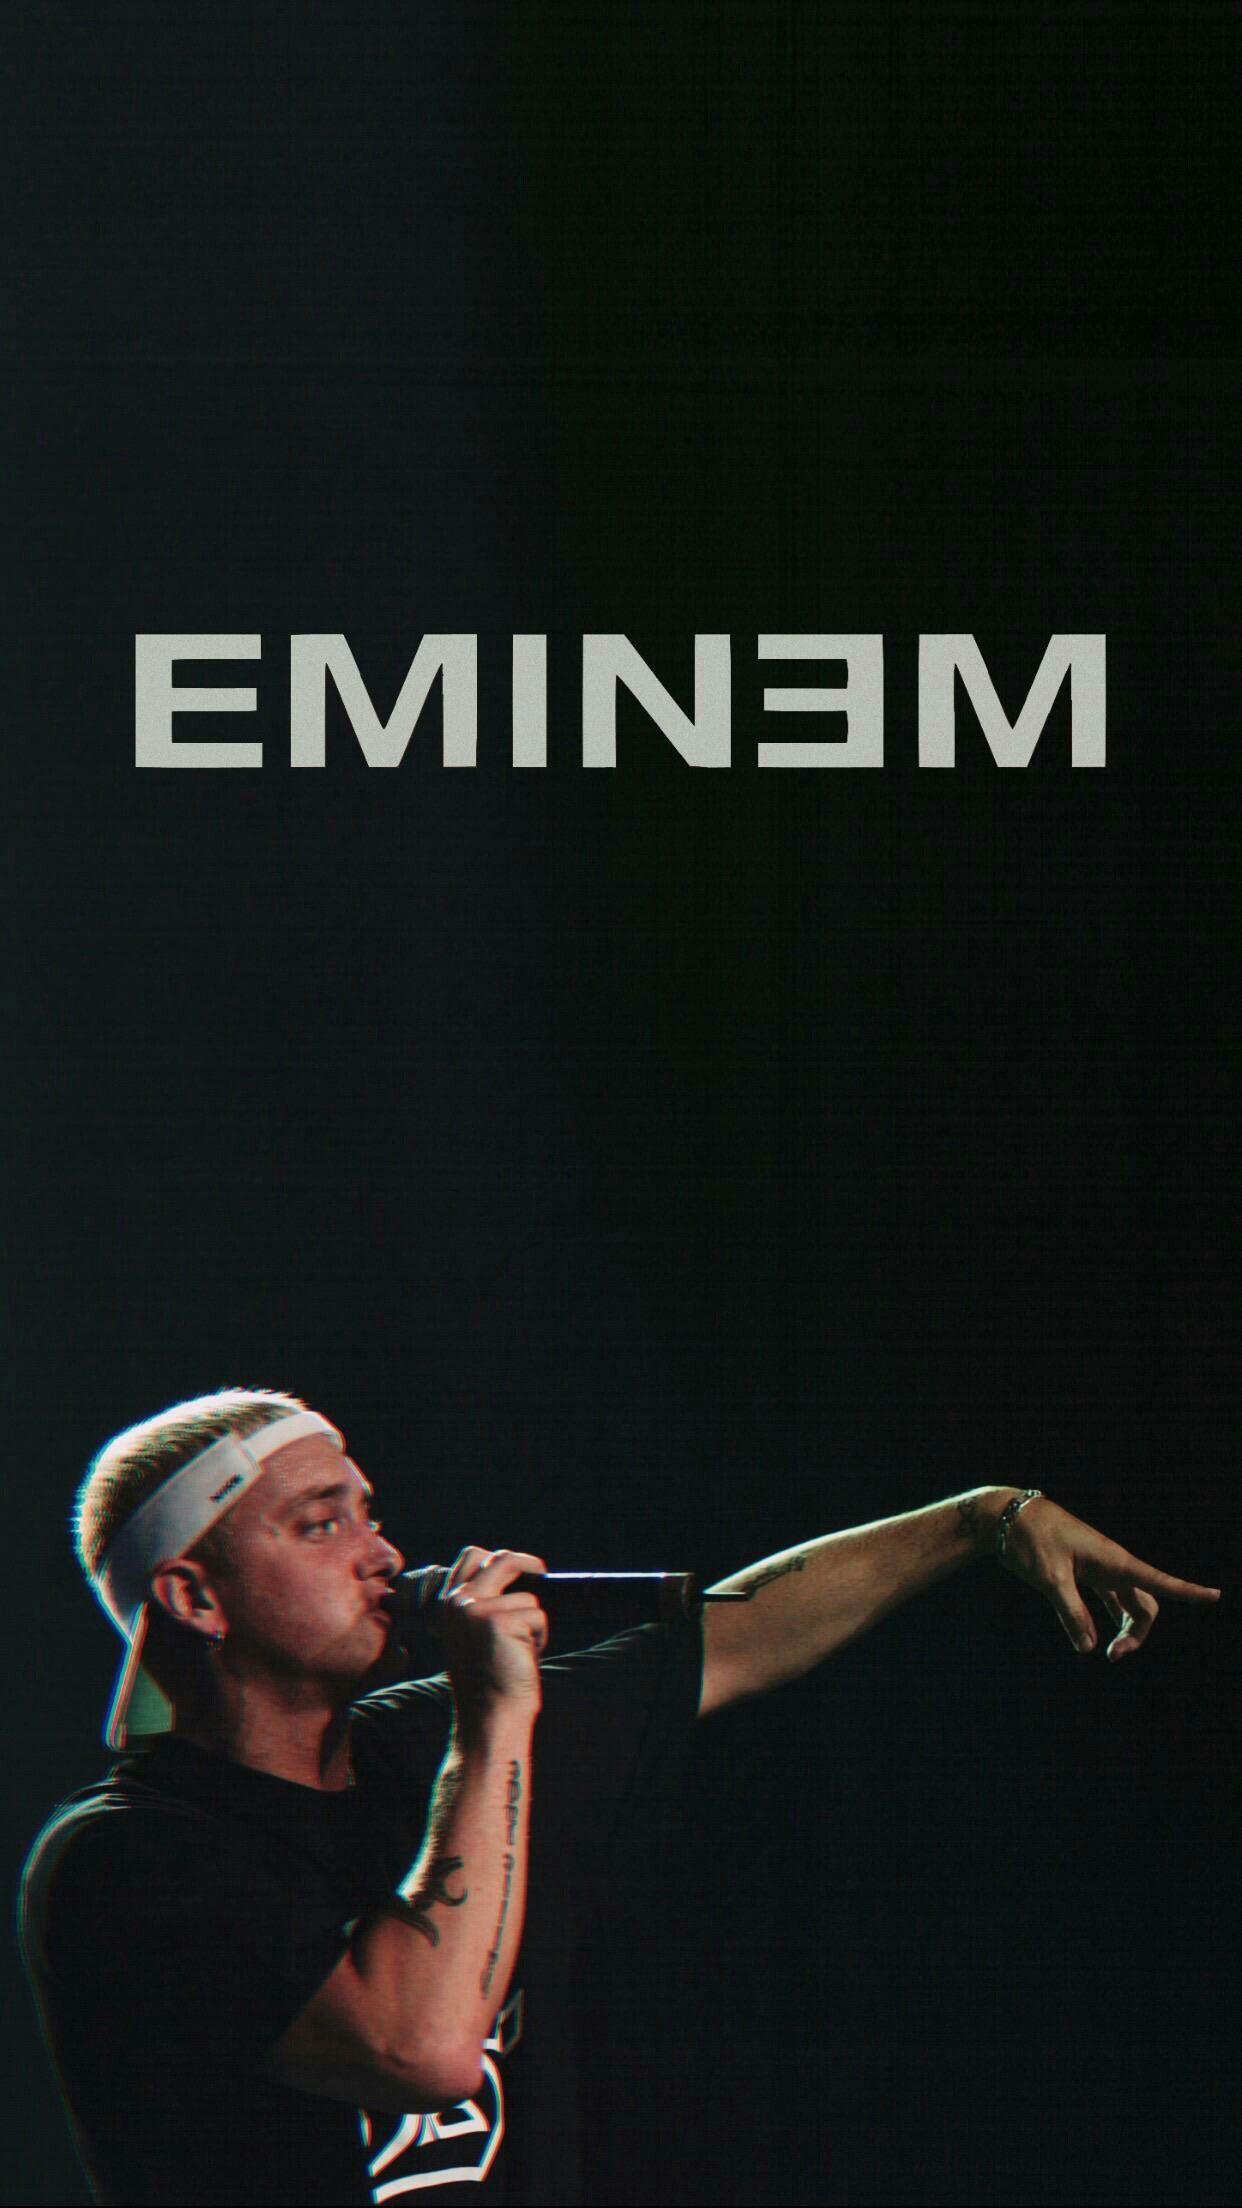 The Eminem Show Wallpaper